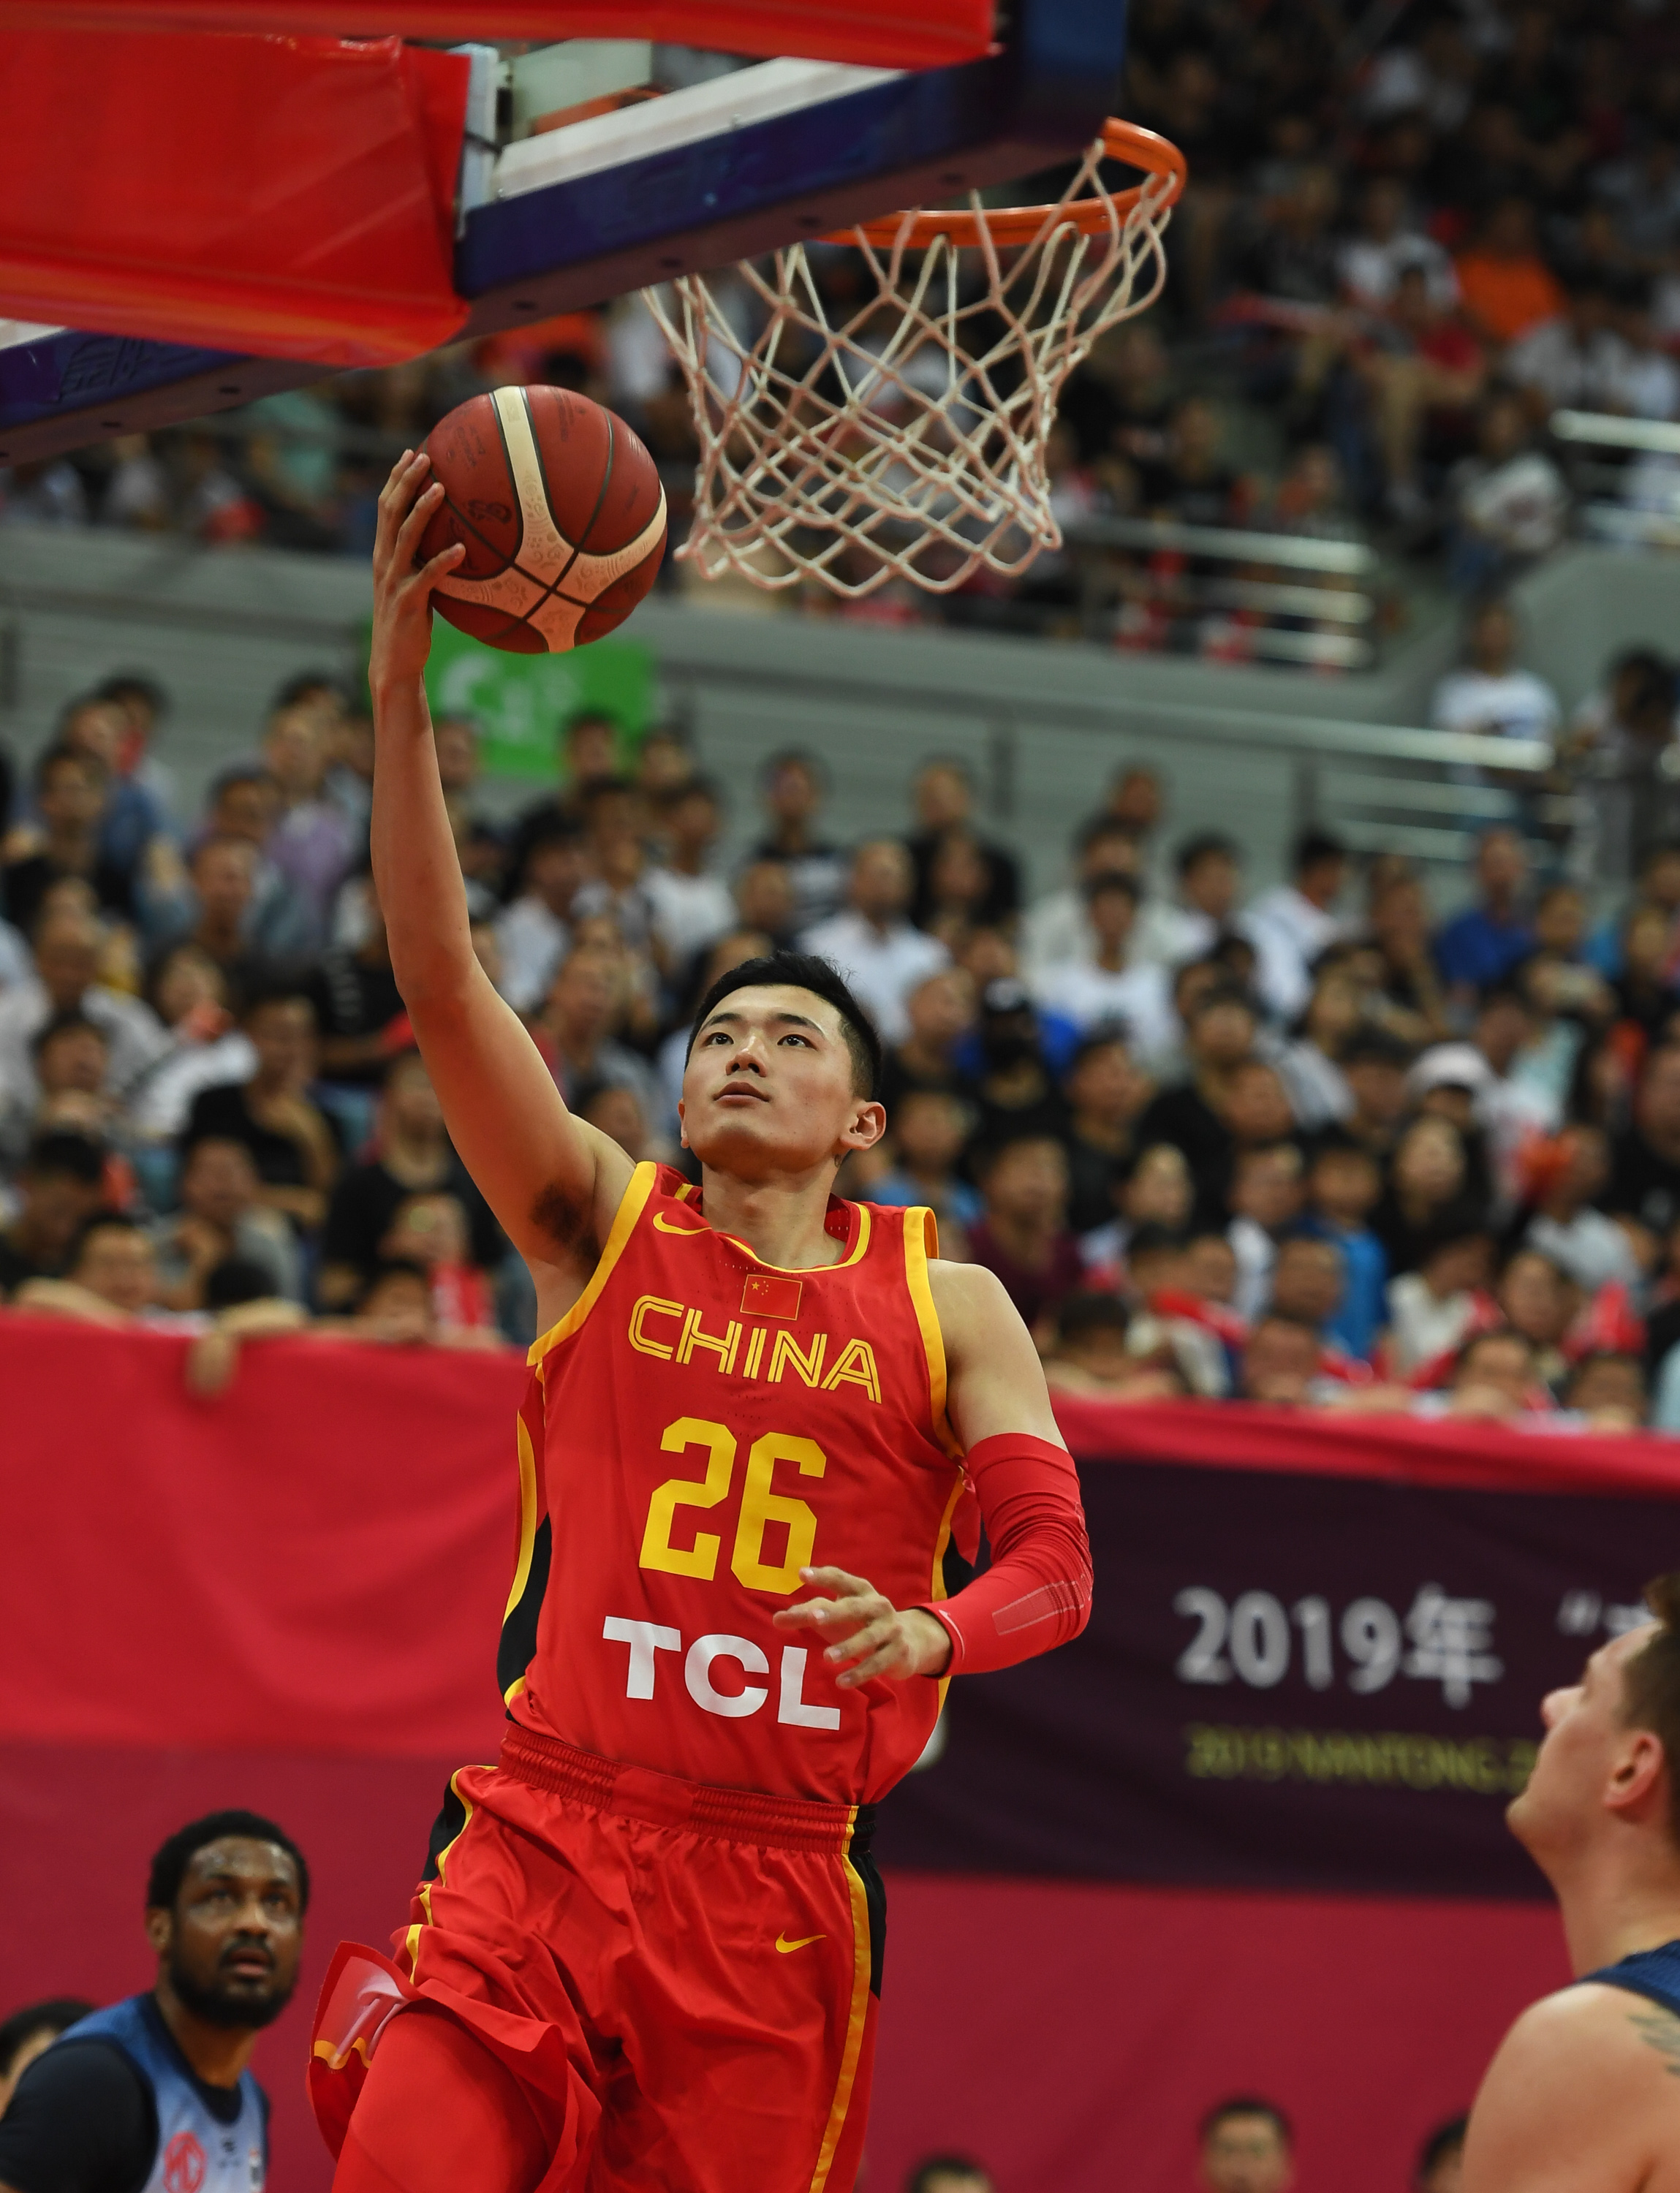 china basketball player